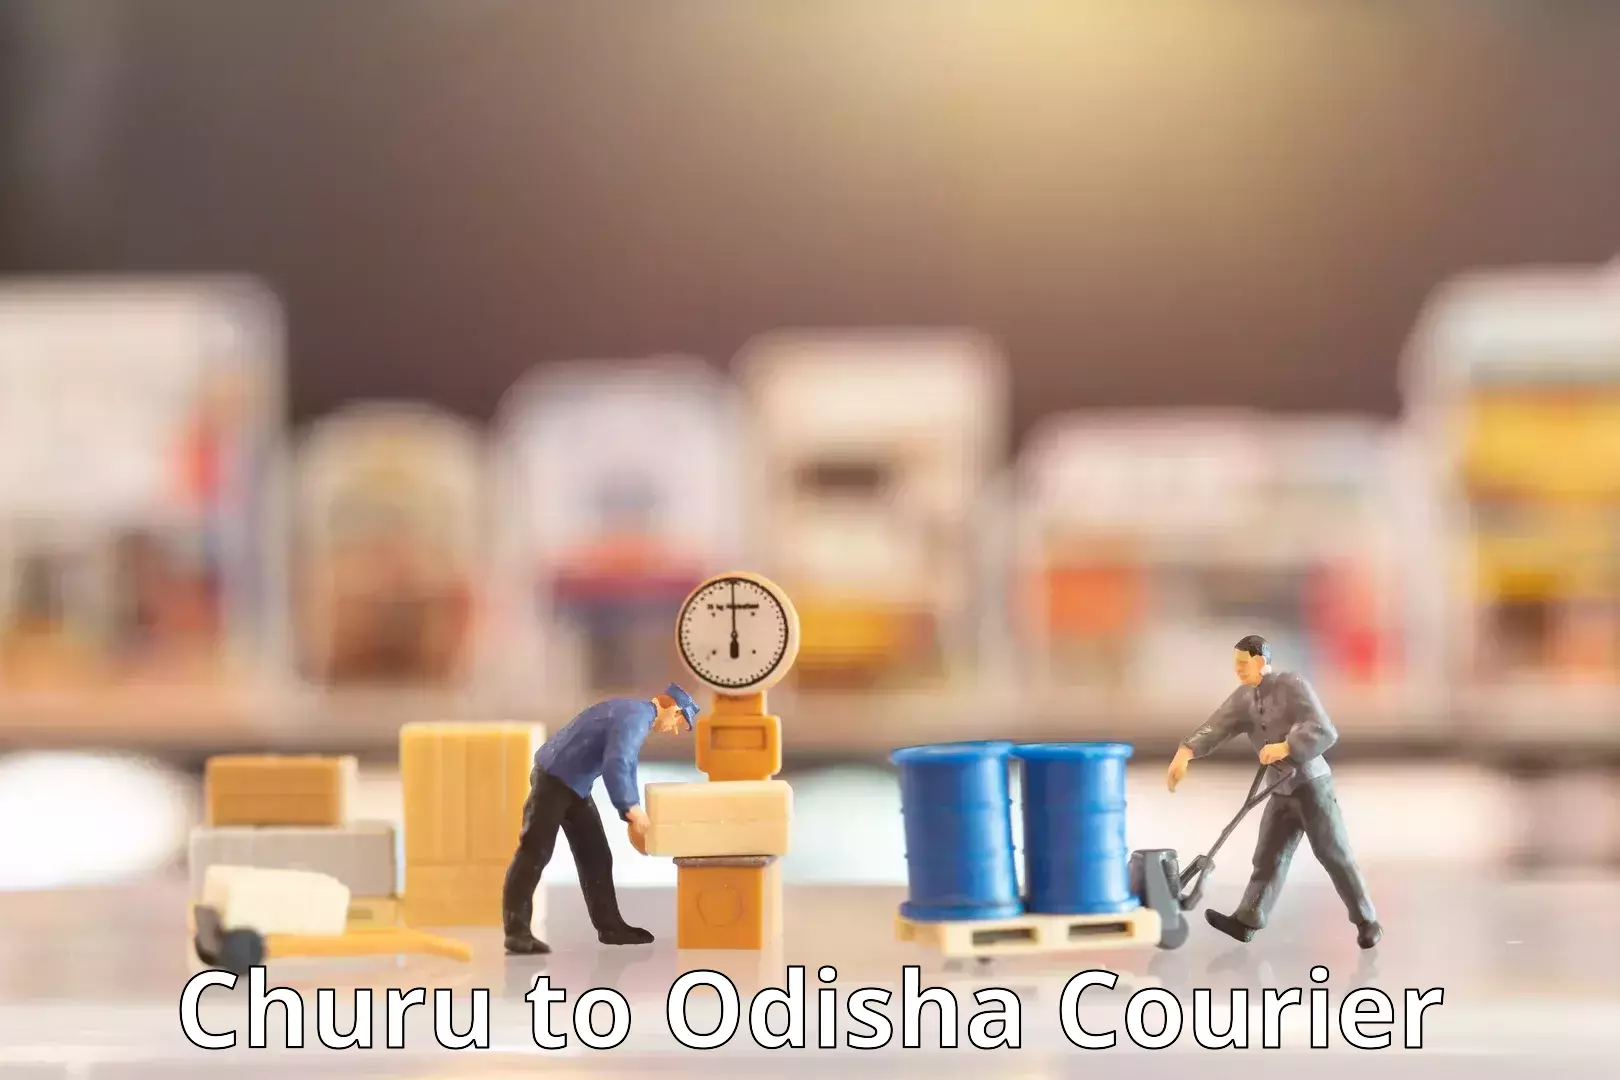 Digital courier platforms Churu to Odisha